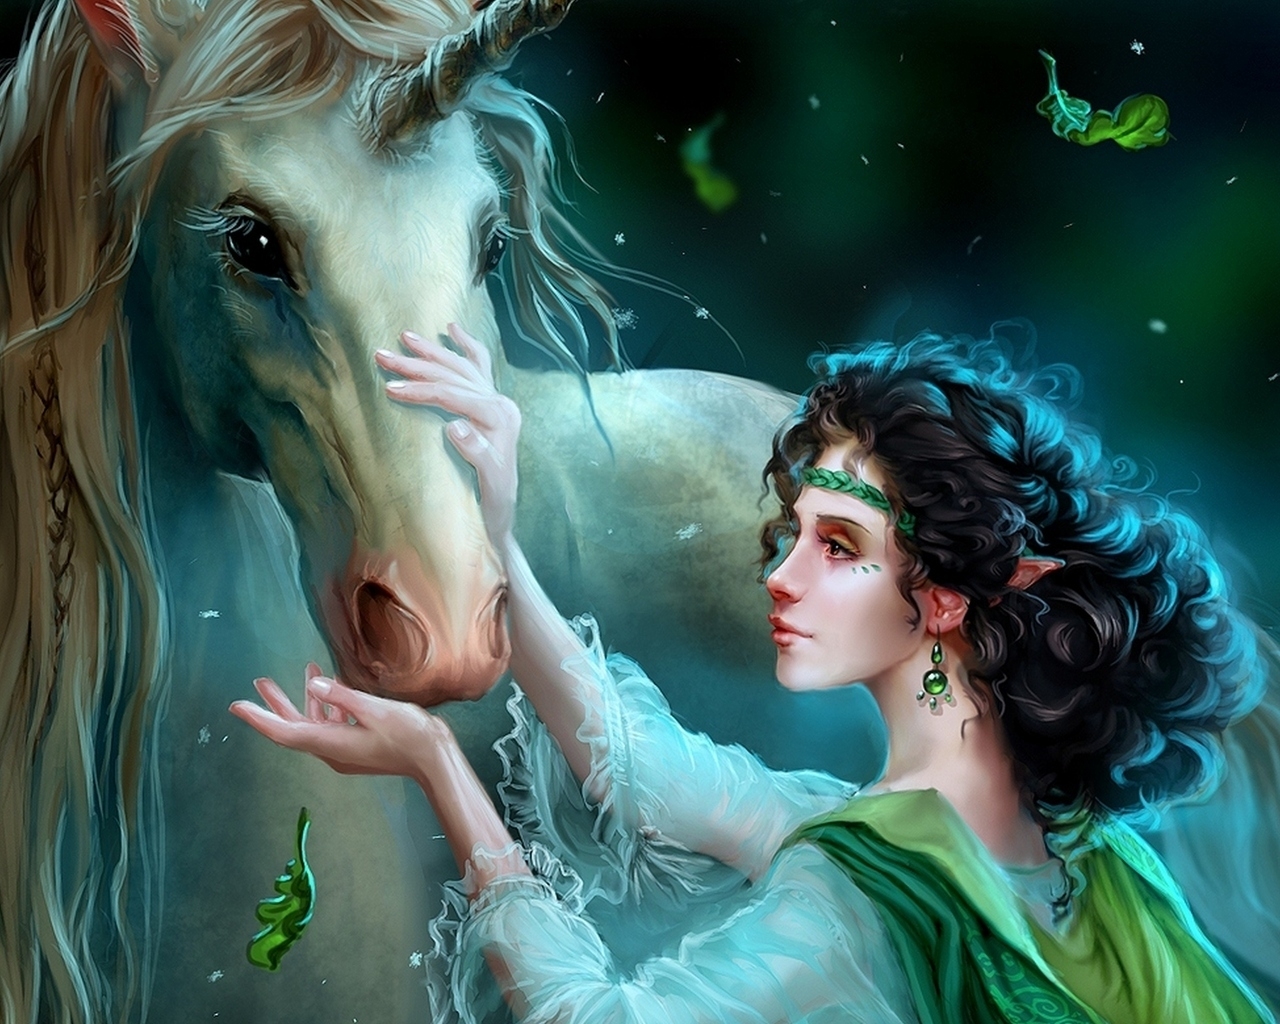 Fairytale Wild Dreamer for 1280 x 1024 resolution